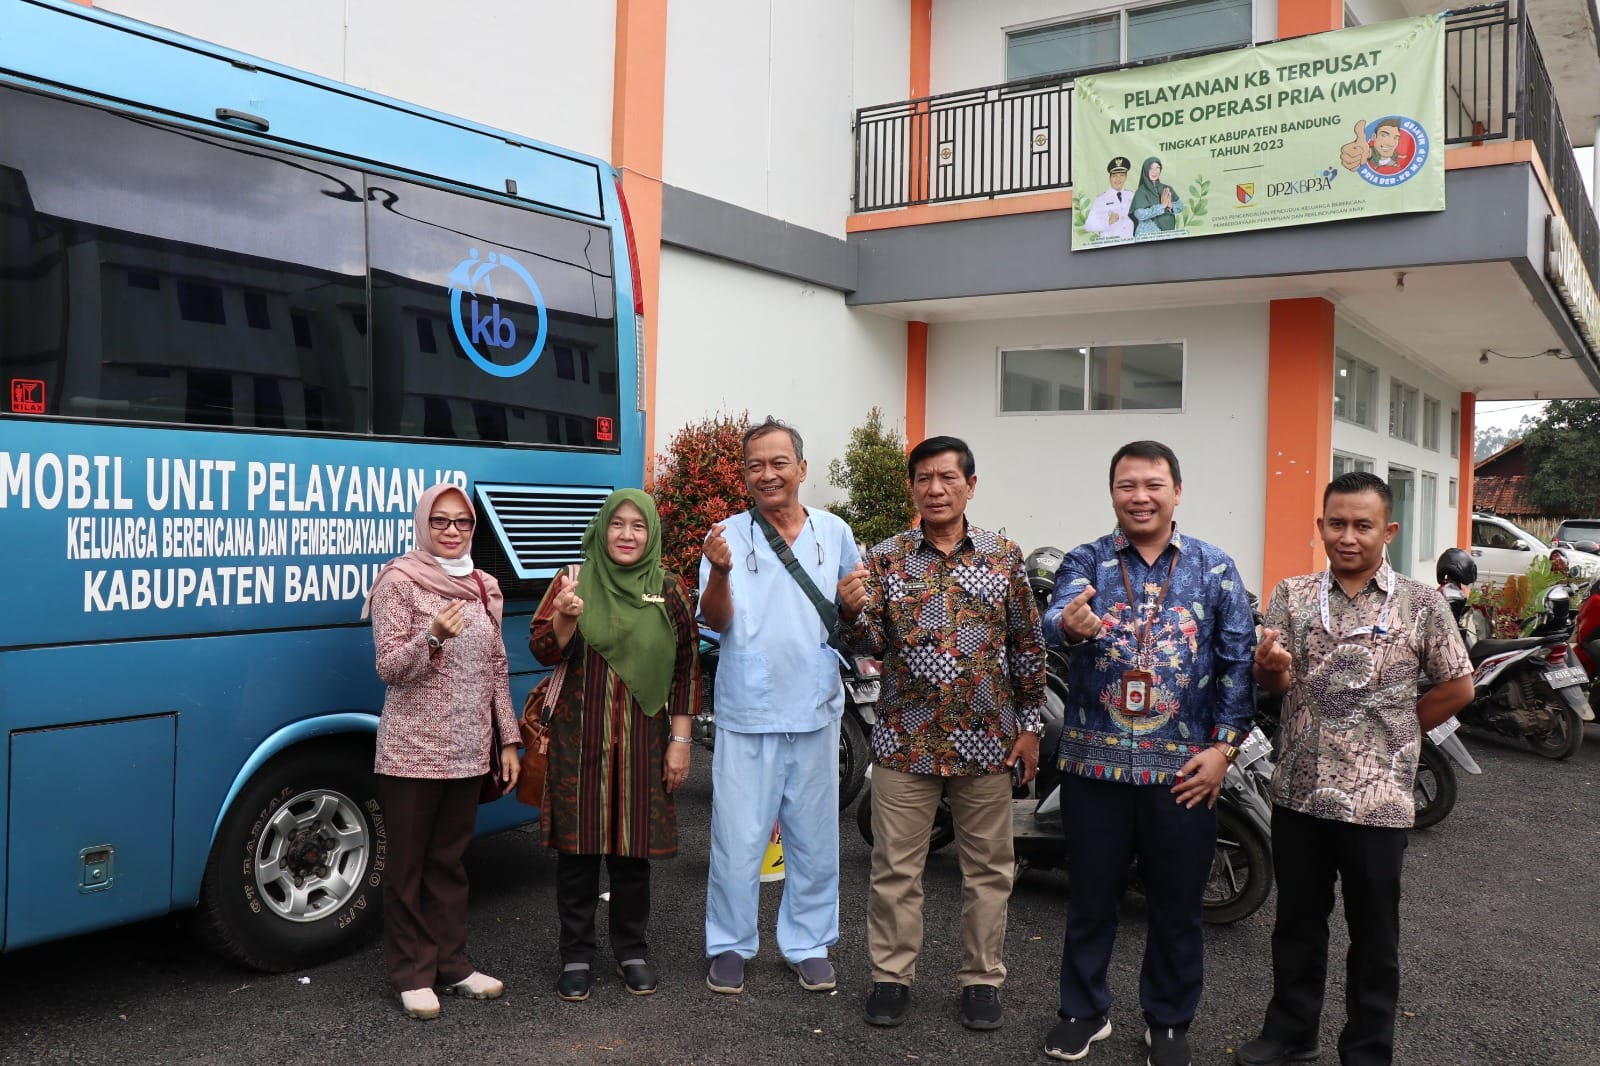 Plt Kepala Perwakilan BKKBN Provinsi Jawa Barat, DR. Dadi Ahmad Roswandi (berbatik biru) dalam kegiatan peluncuran Pelayanan KB terpusat MKJP di Desa Margamekar Kabupaten Bandung.